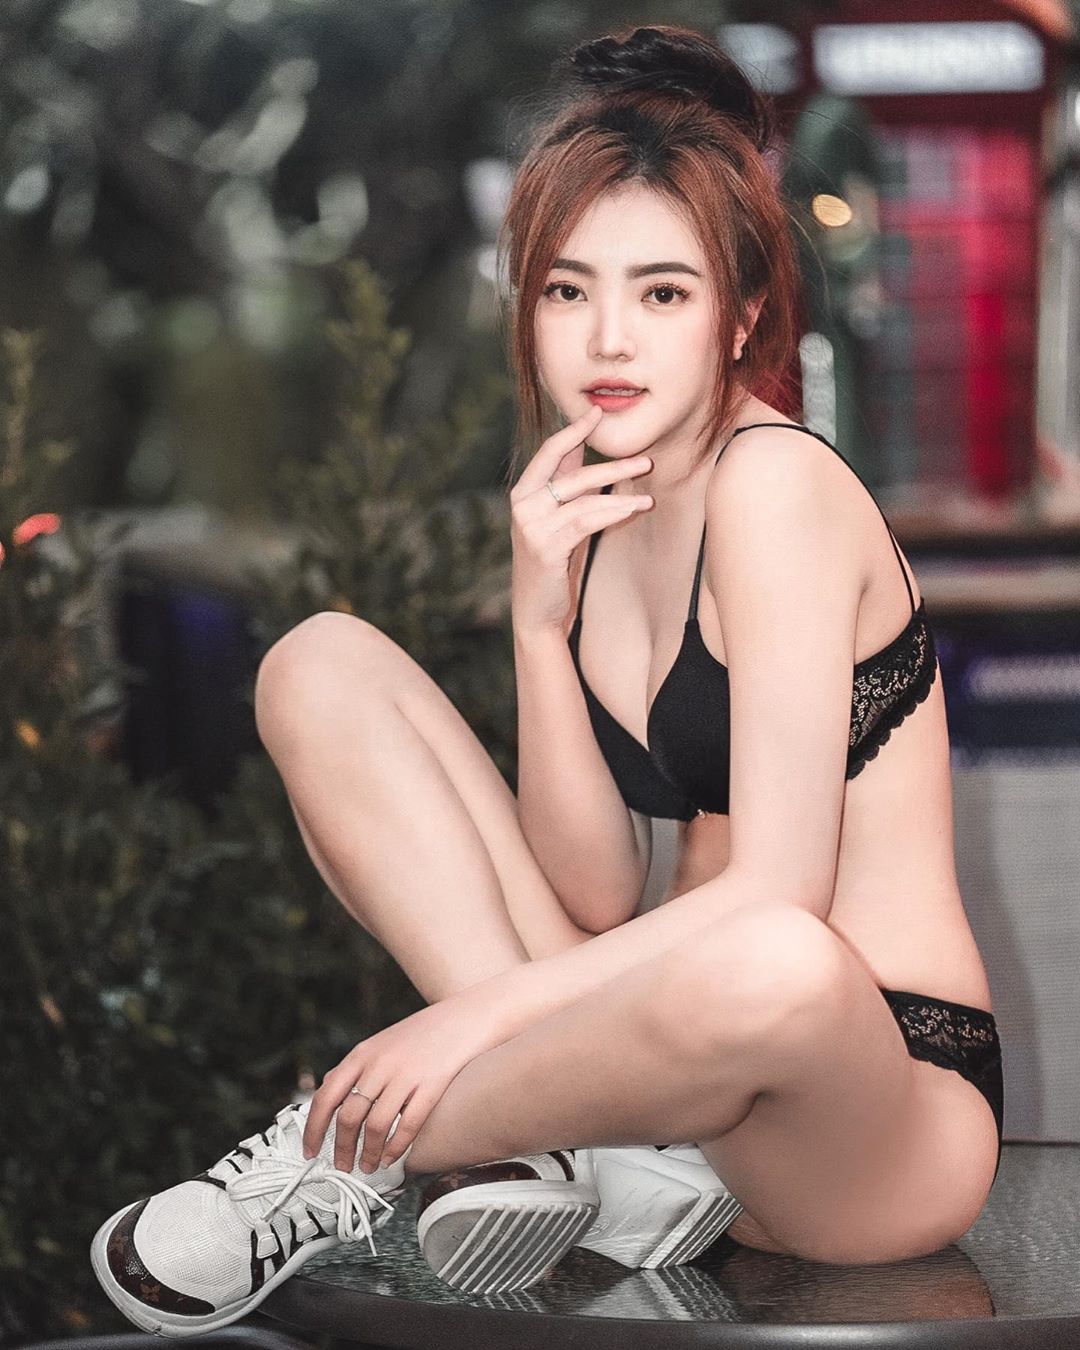 Kanoktip Tummanon – Most Beautiful Thailand Girl in Sexy Lingerie Instagram